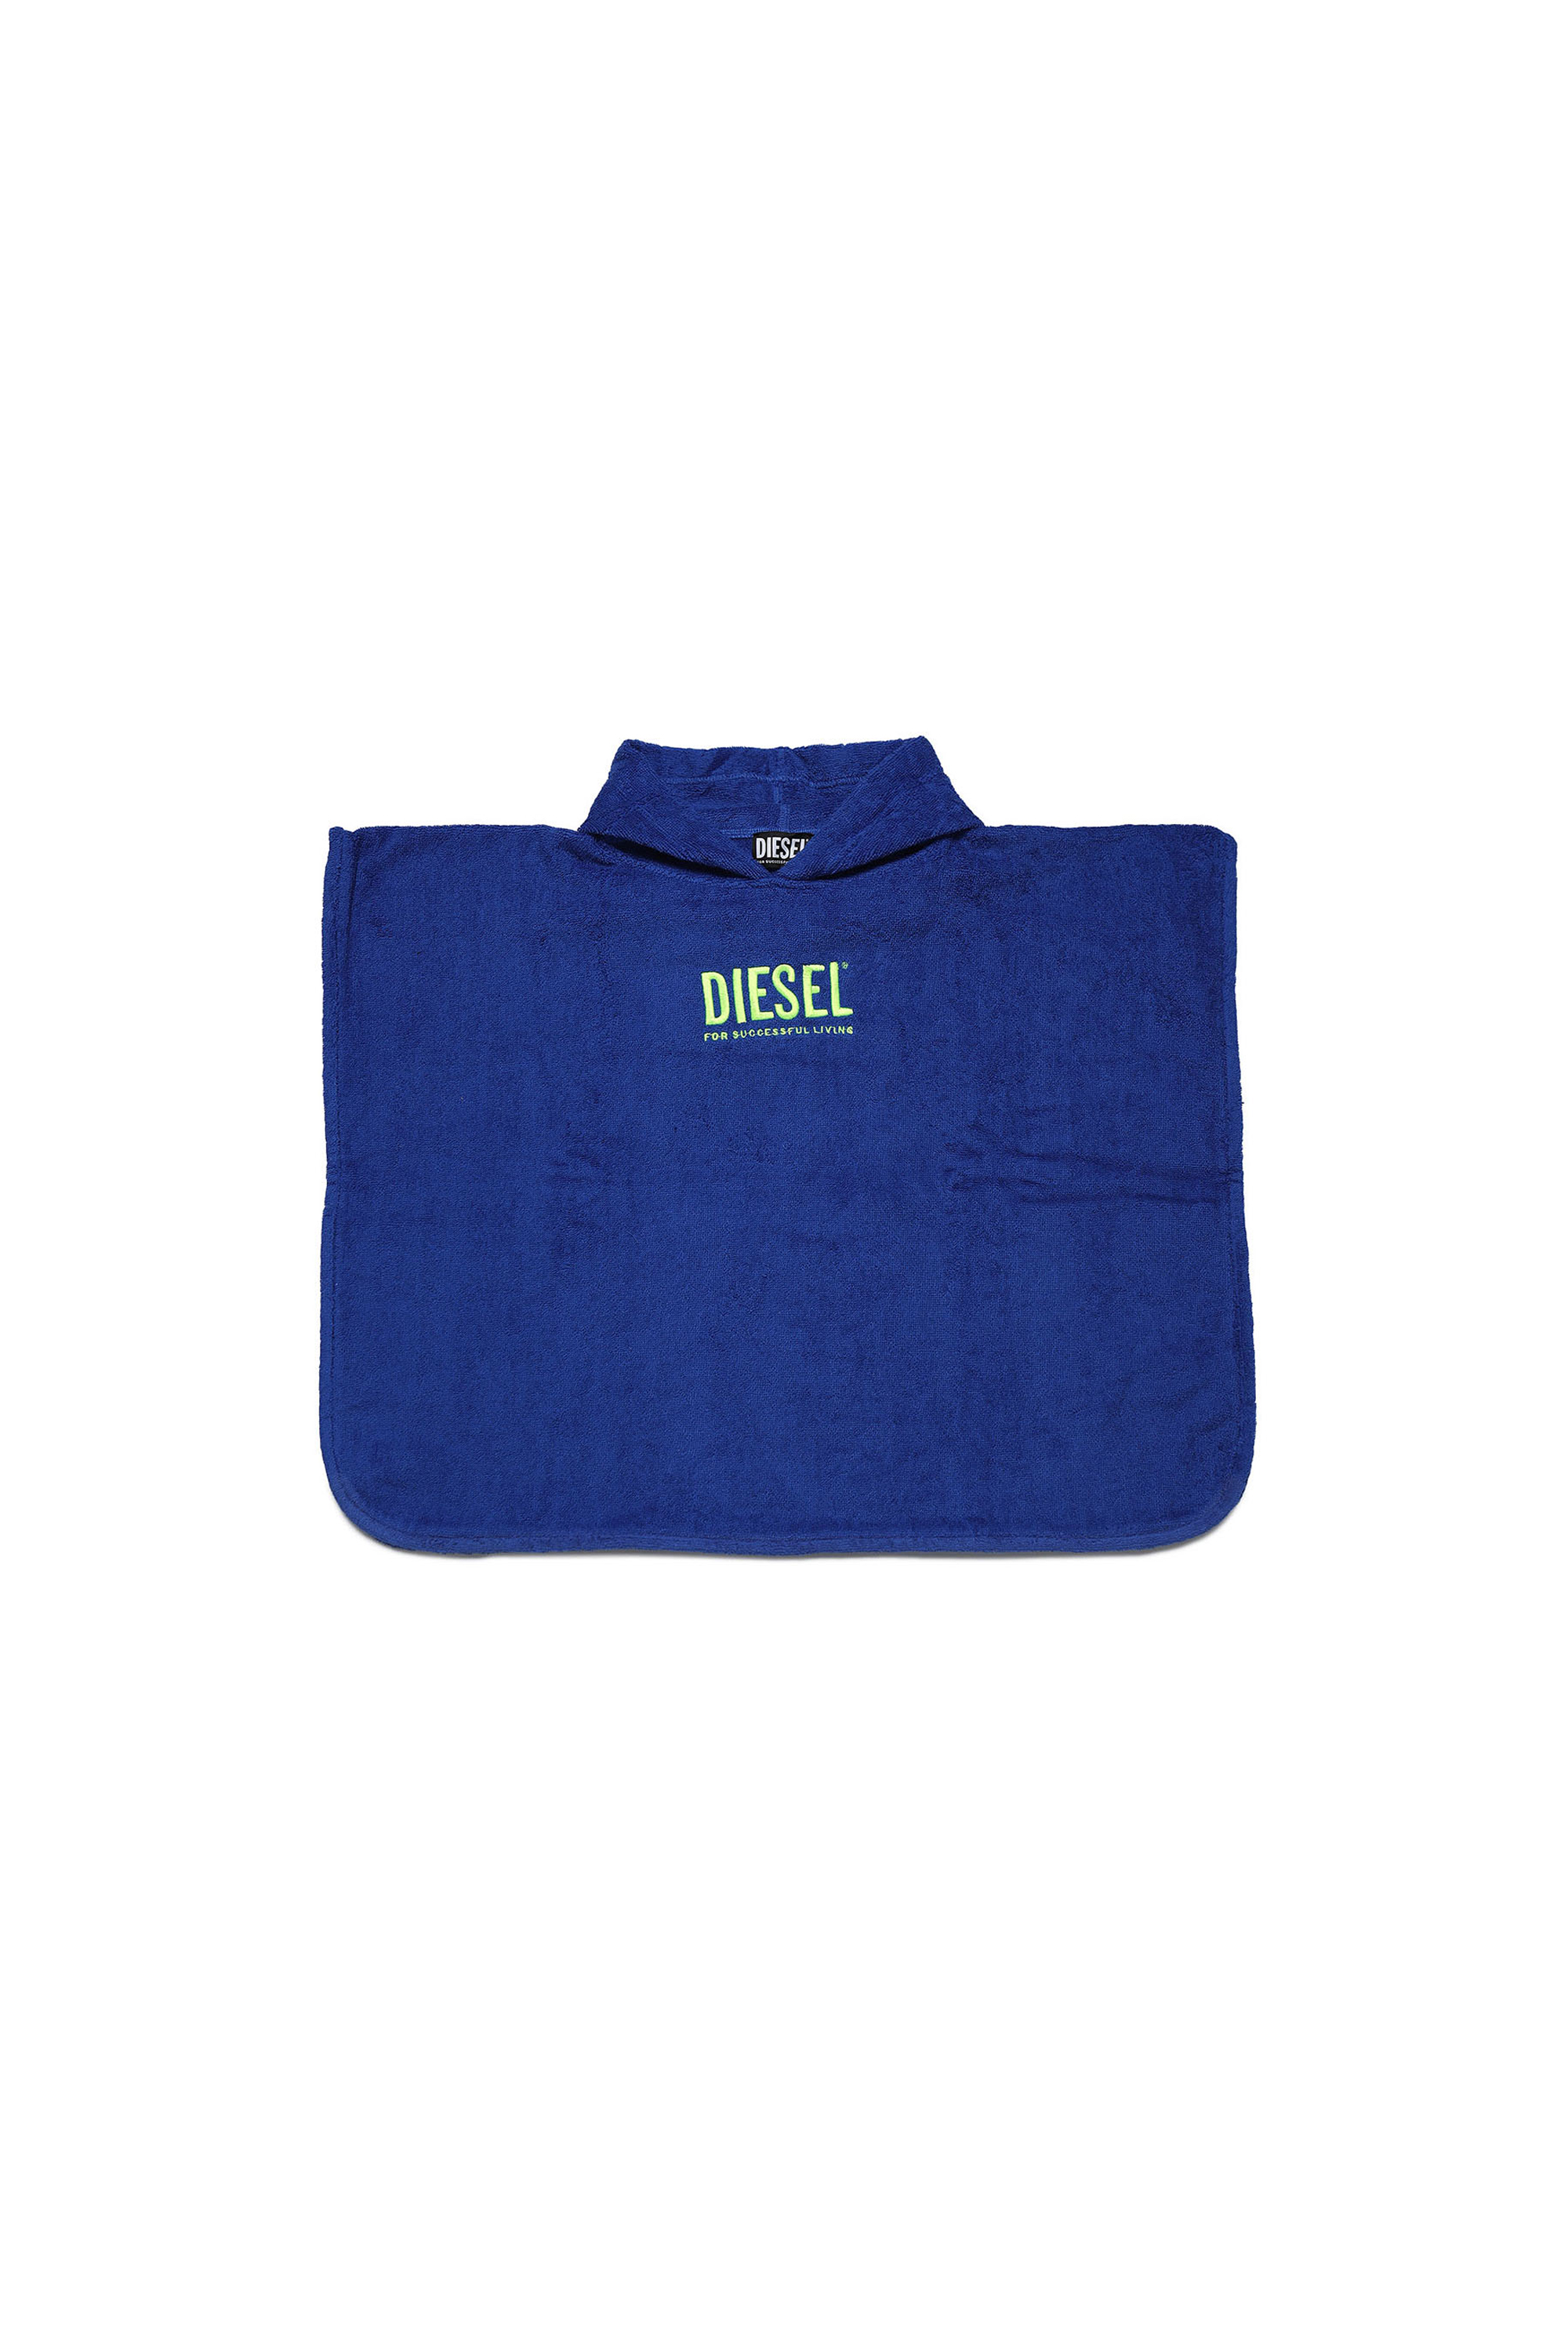 Diesel - MANDRYB, Blue - Image 1